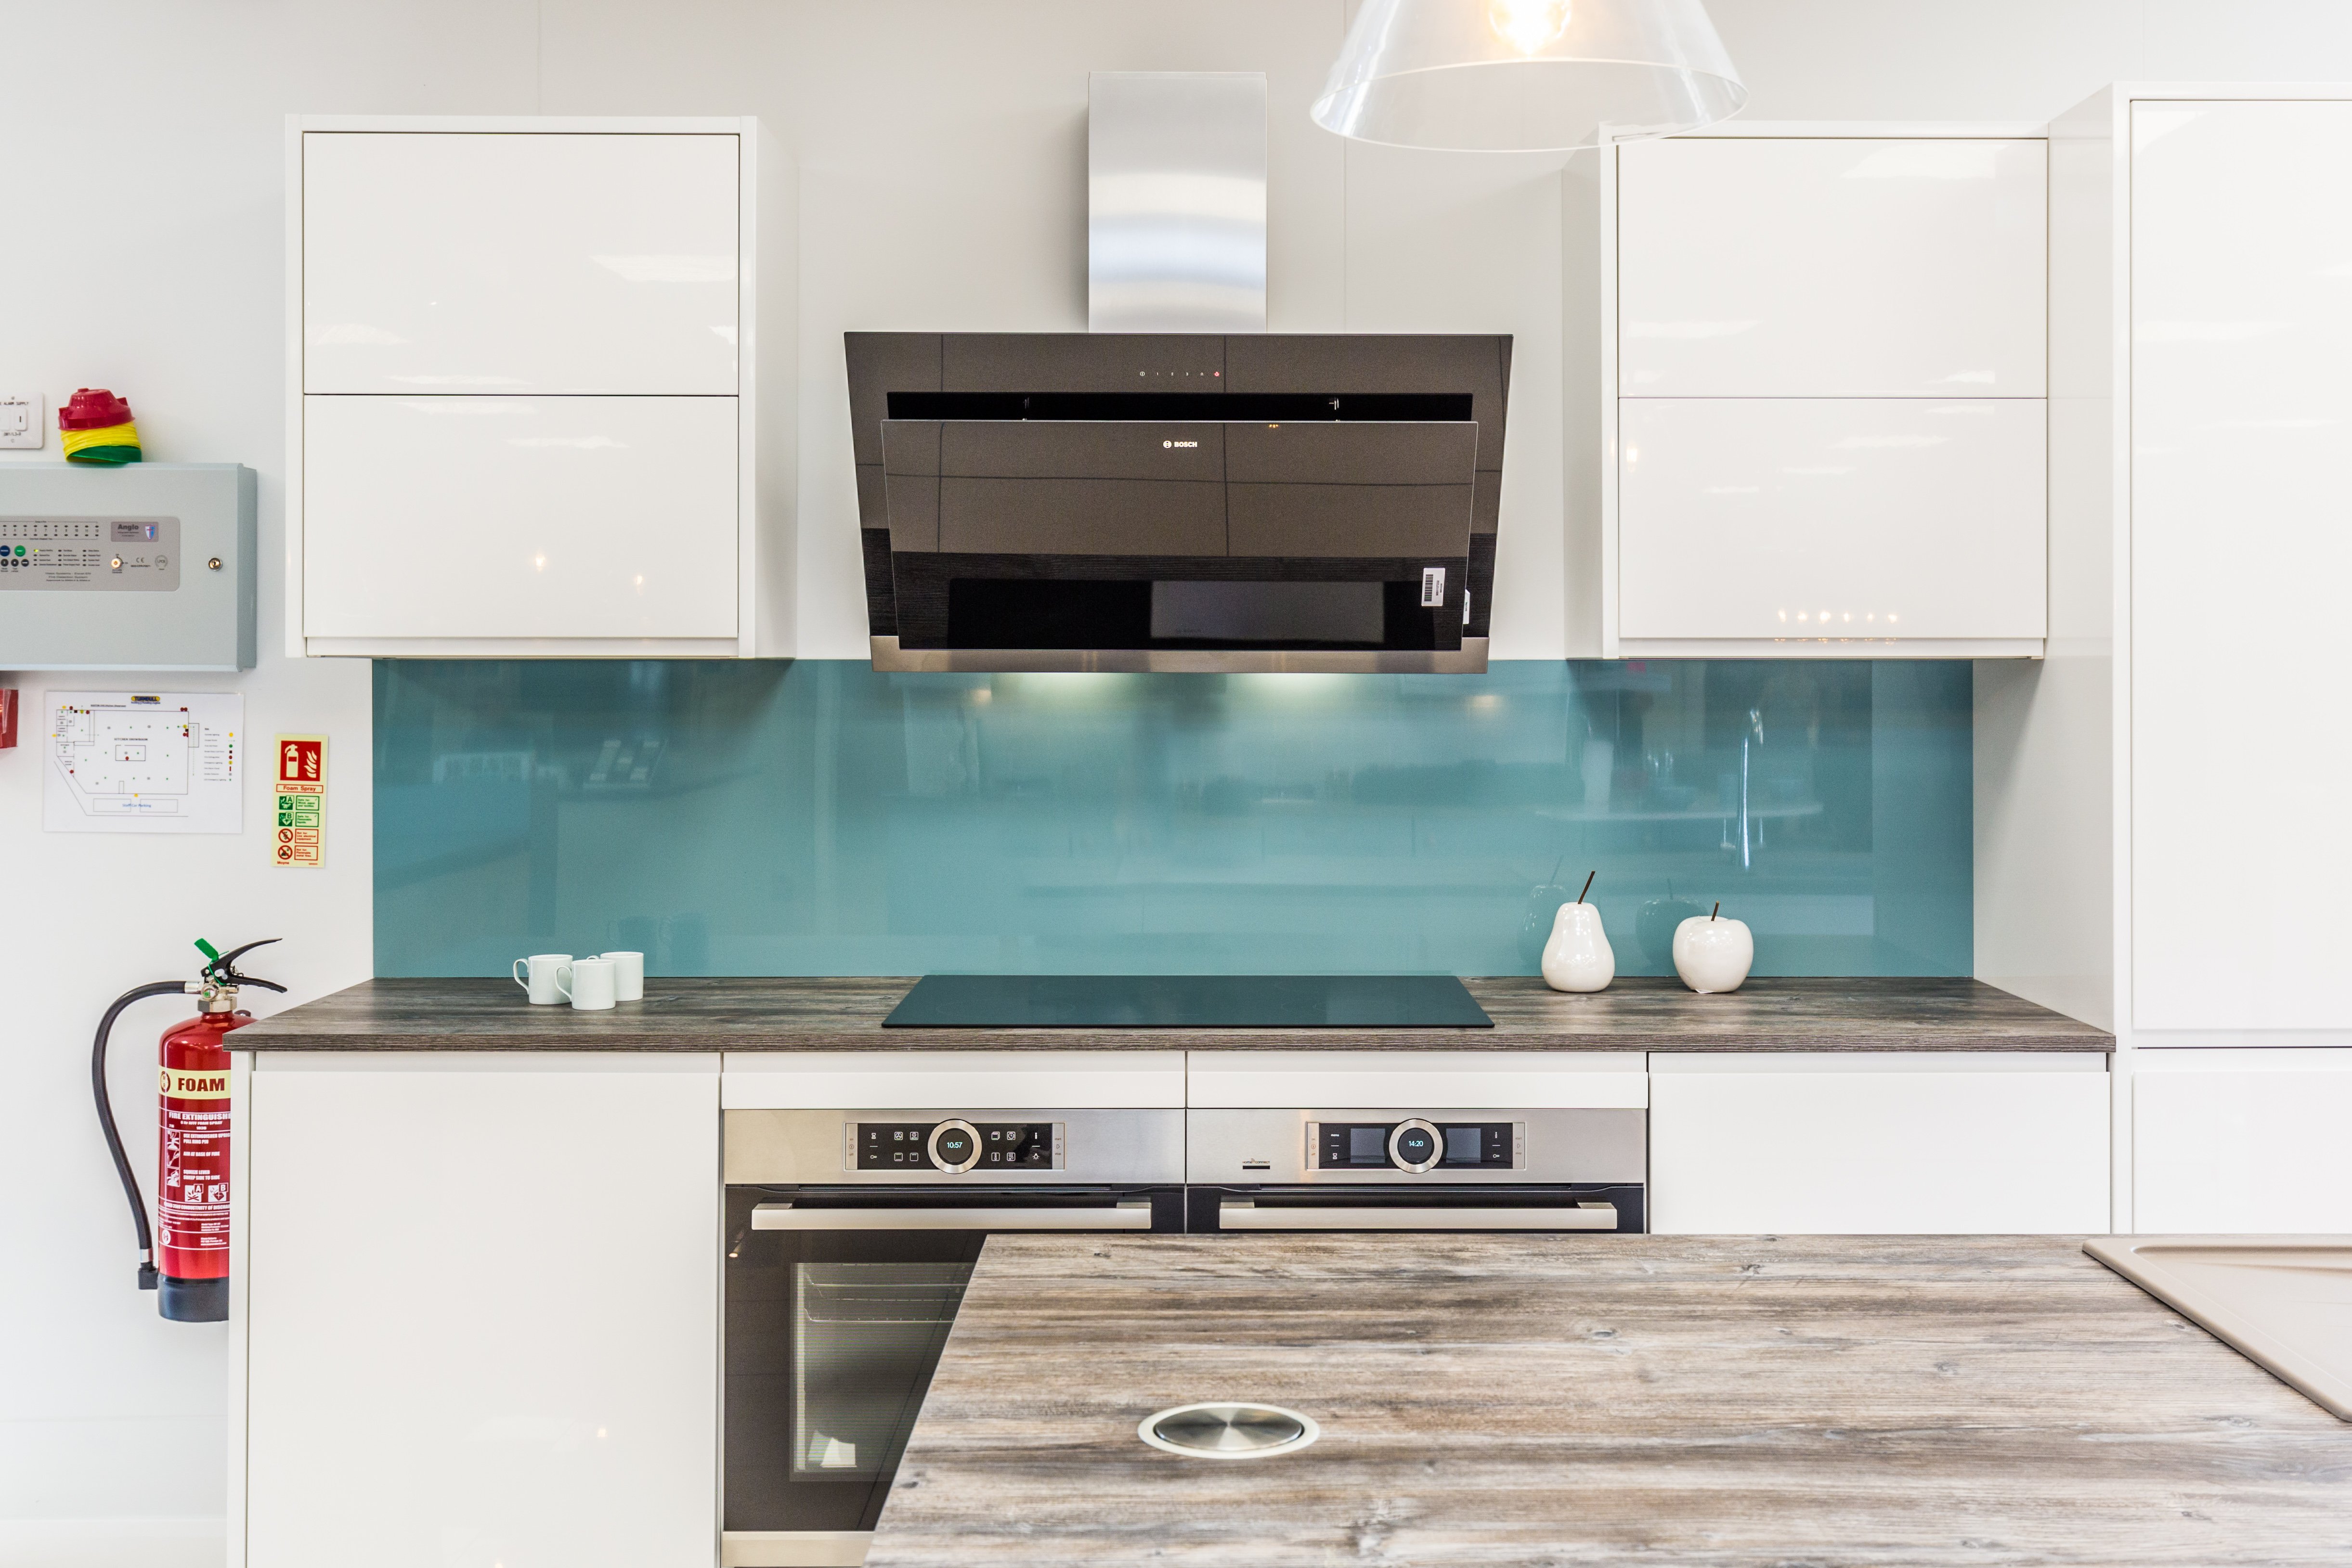 White kitchen with aqua blue backsplash - on display at Boston Kitchen showroom